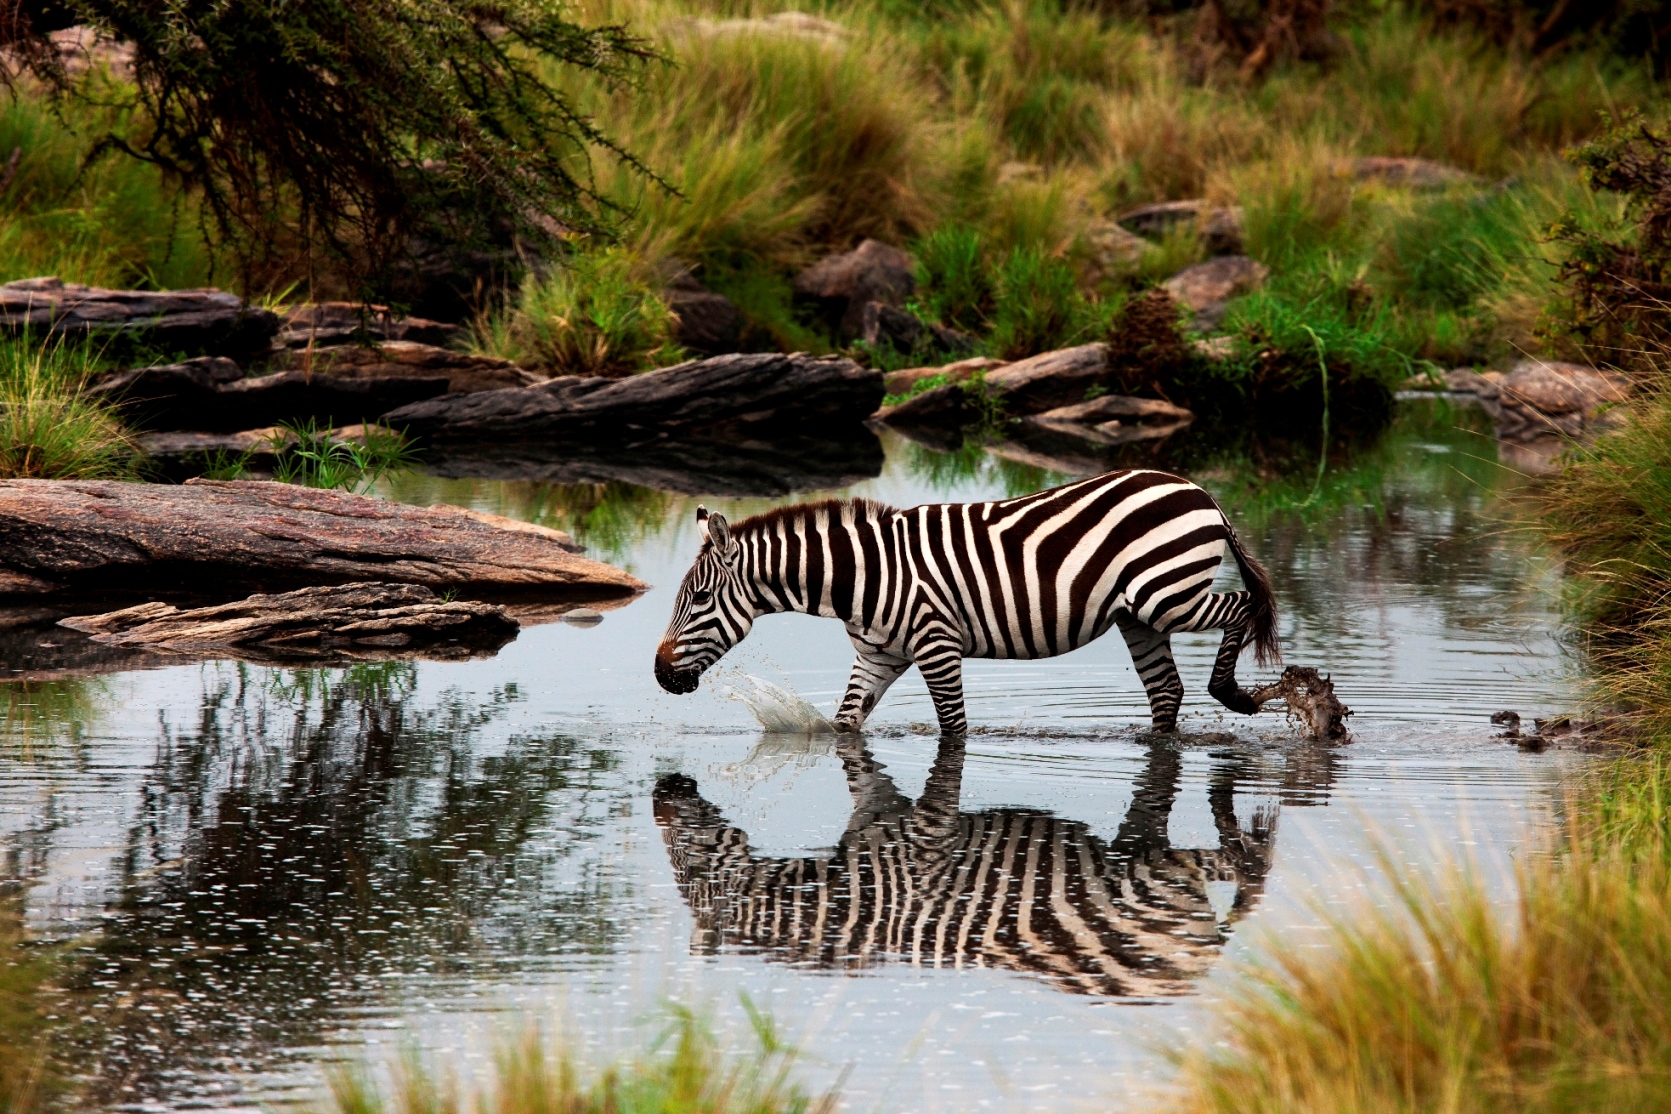 Zebra walking through water near Mara expedition camp, kenya